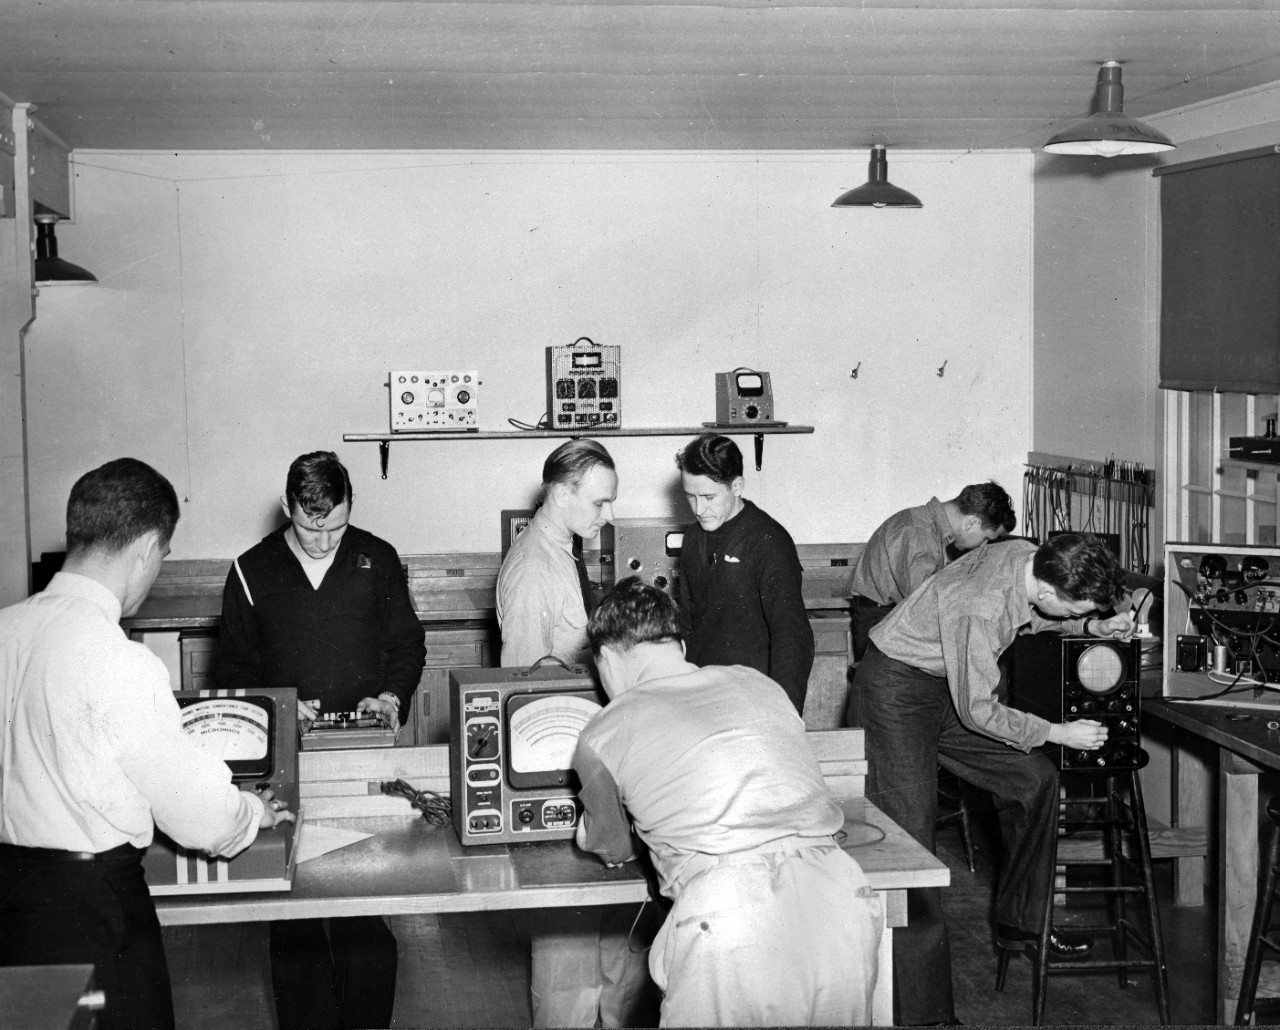 Training in radio laboratory methods